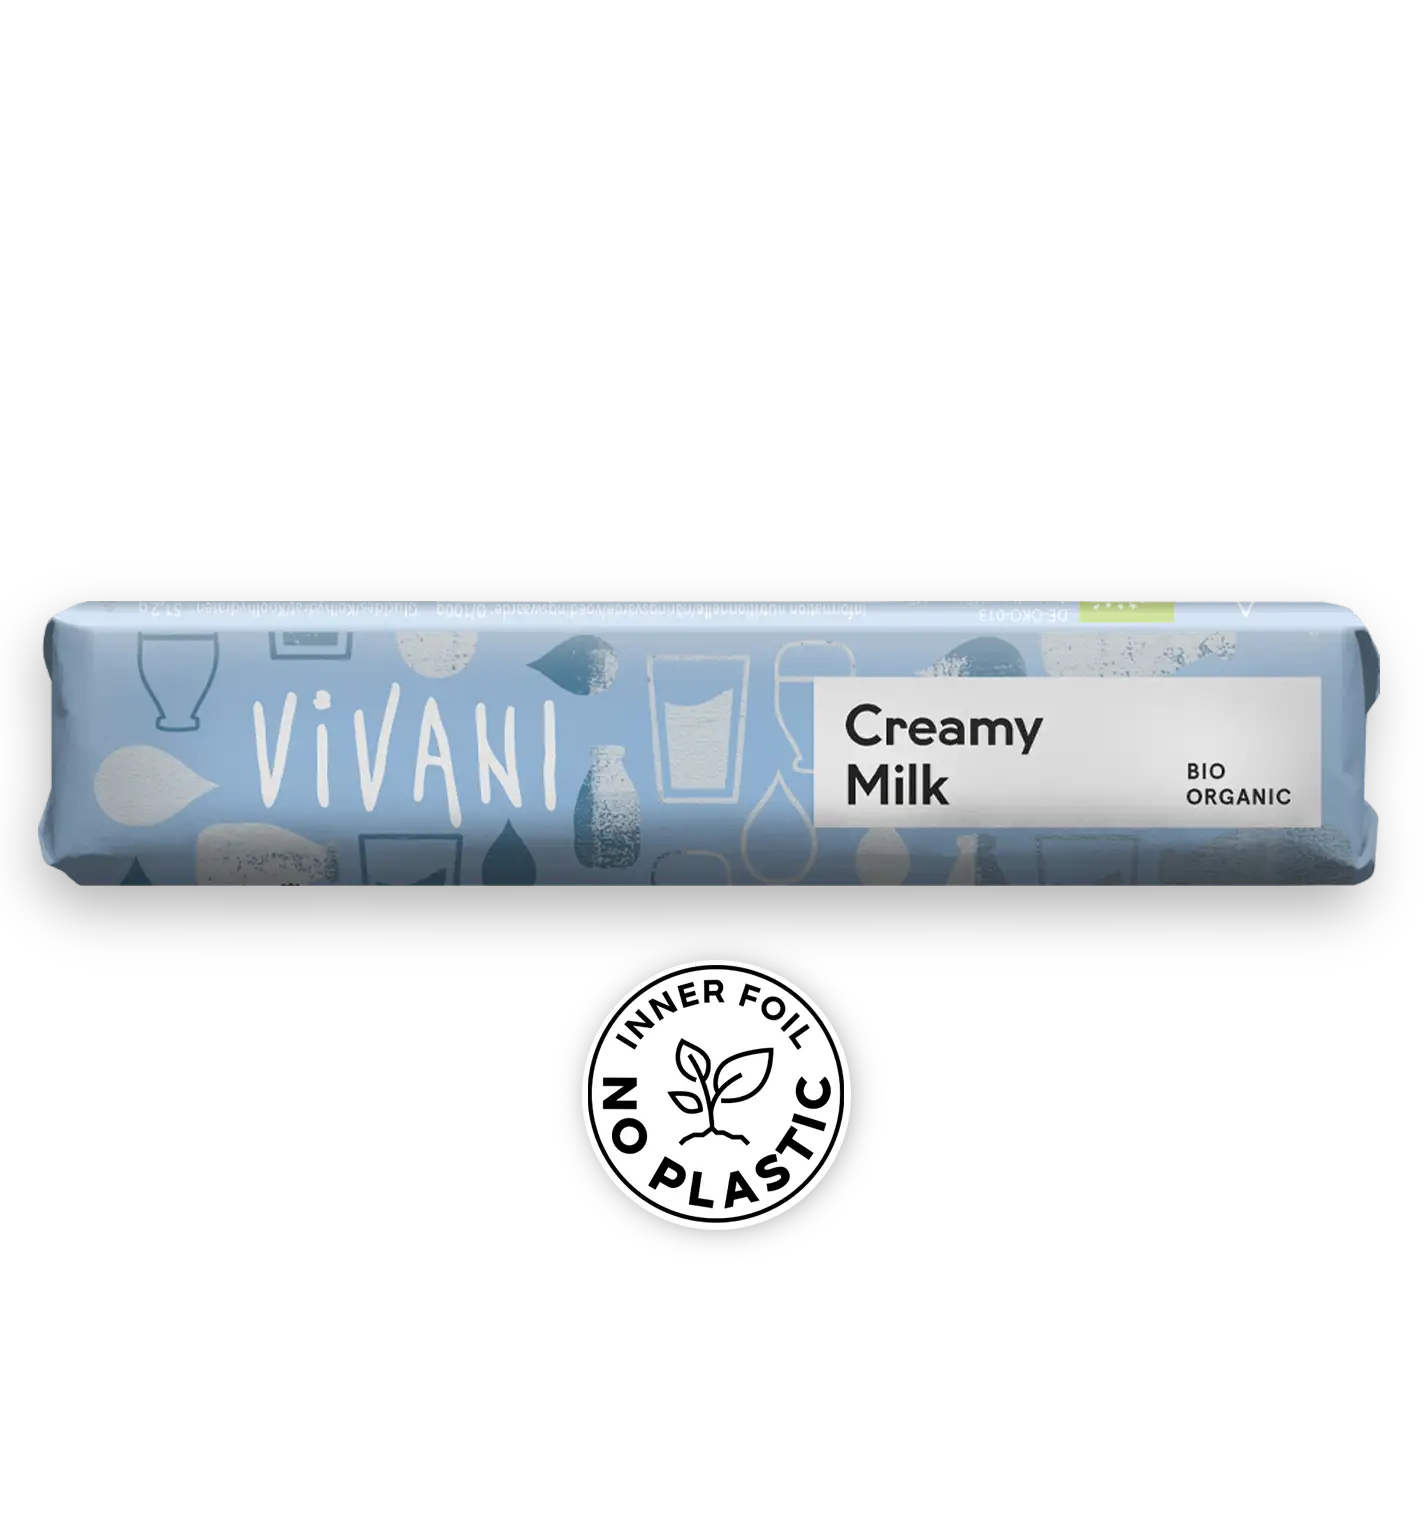 VIVANI's organic chocolate bar Creamy Milk filled with fine milky creme